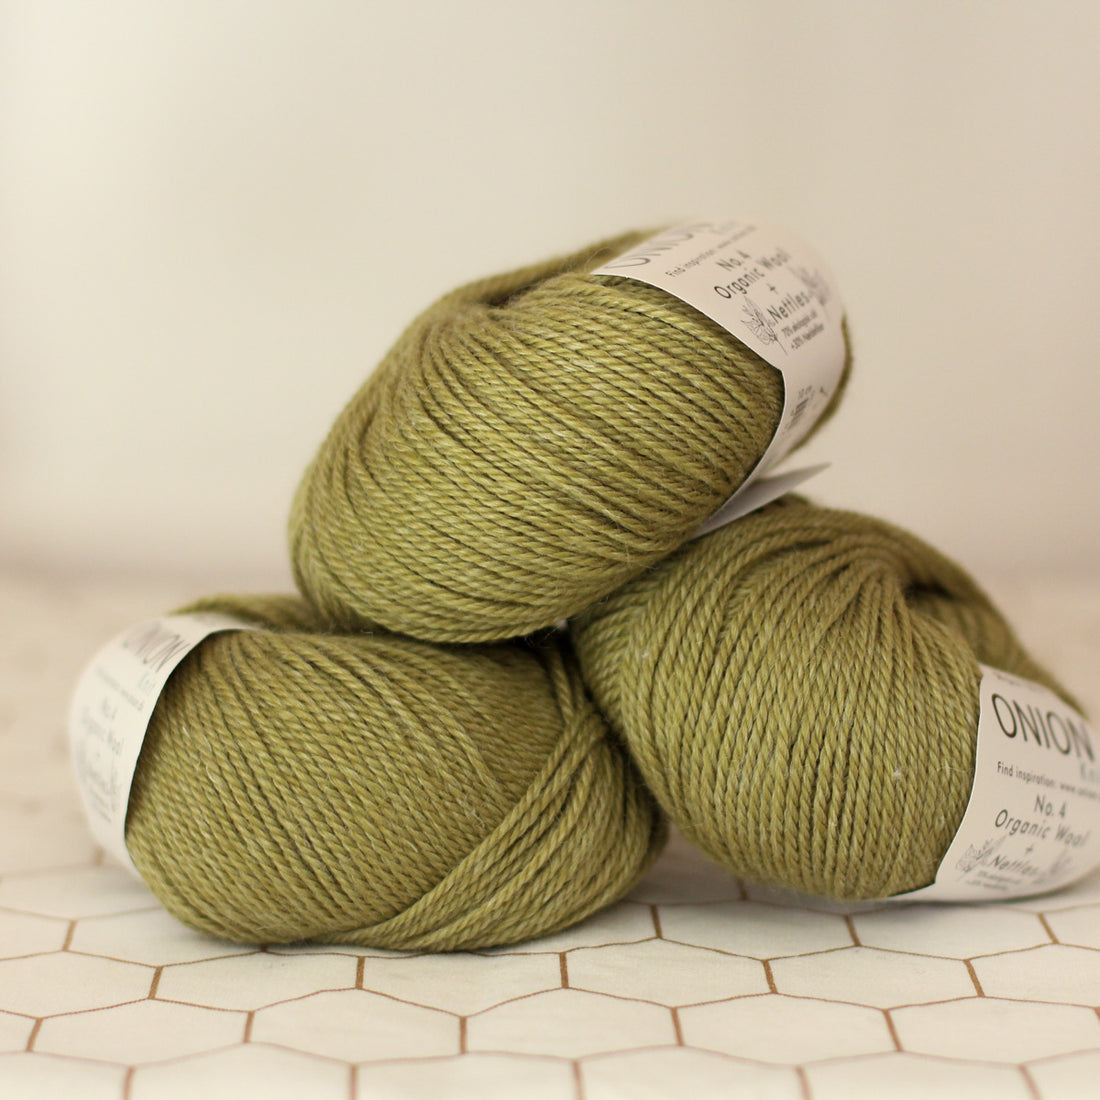 No.4 Organic Wool + Nettles | 8ply DK